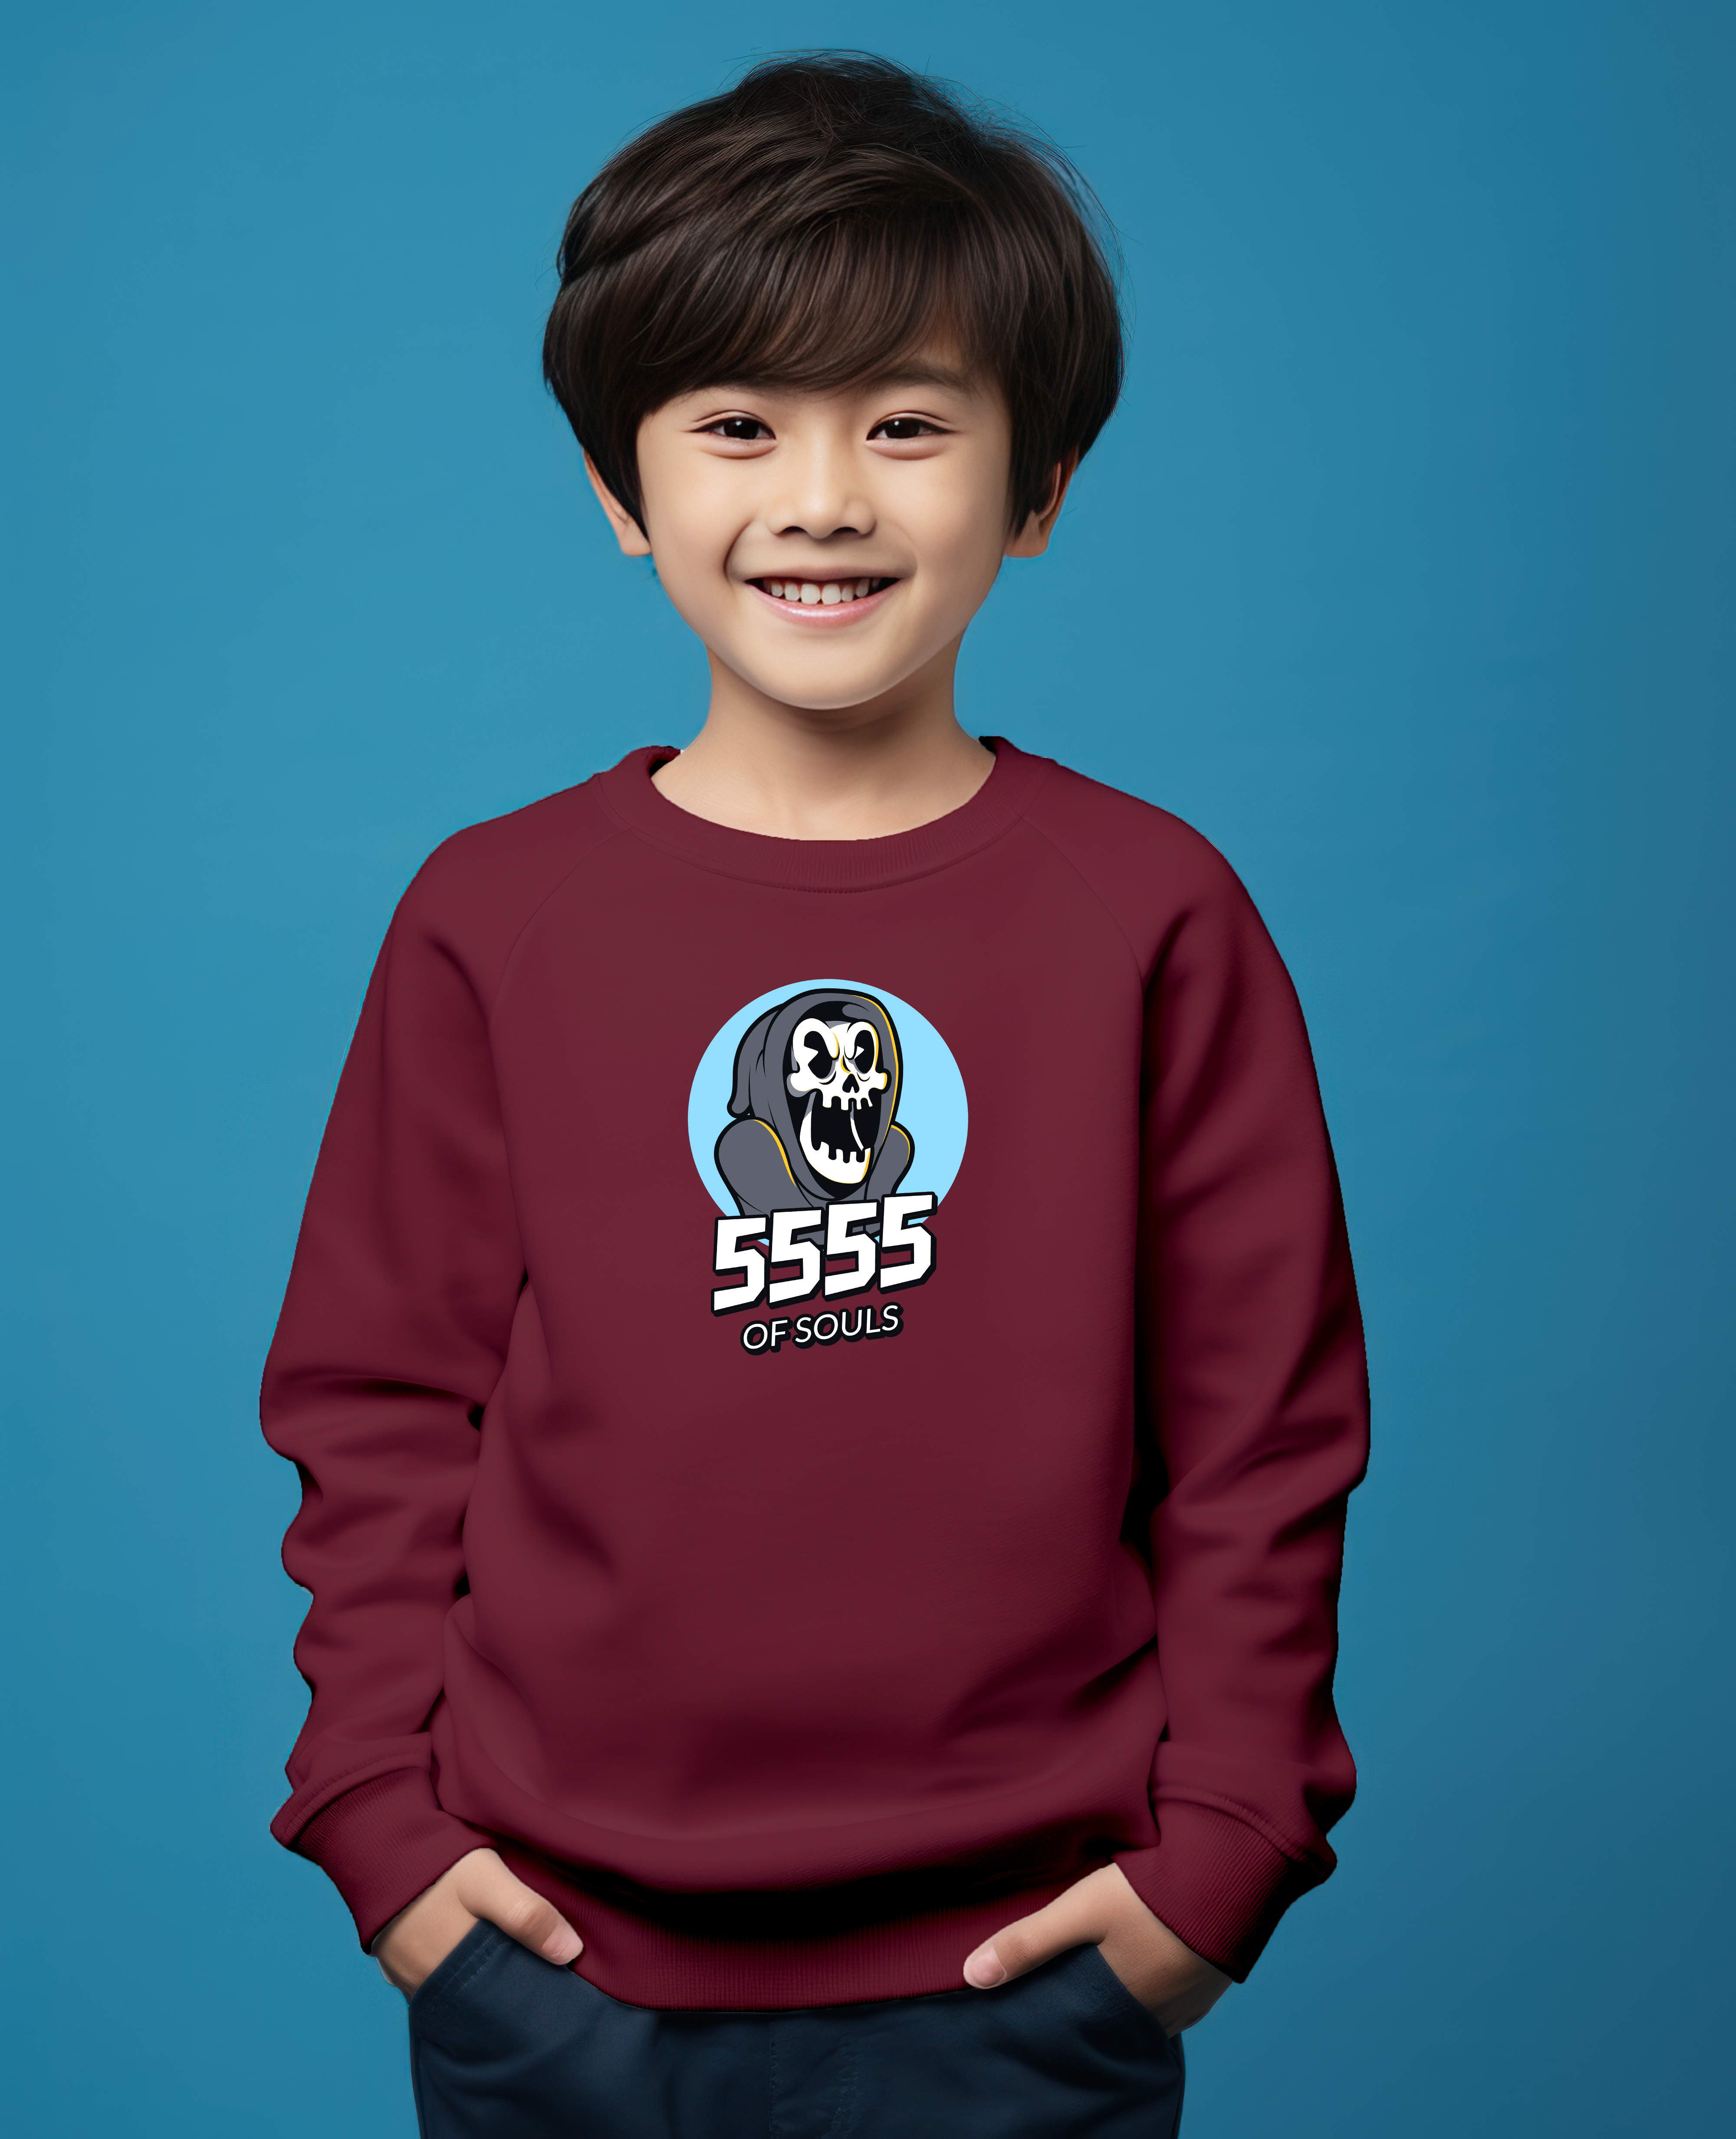 5555 of souls maroon sweatshirt for boys & girls